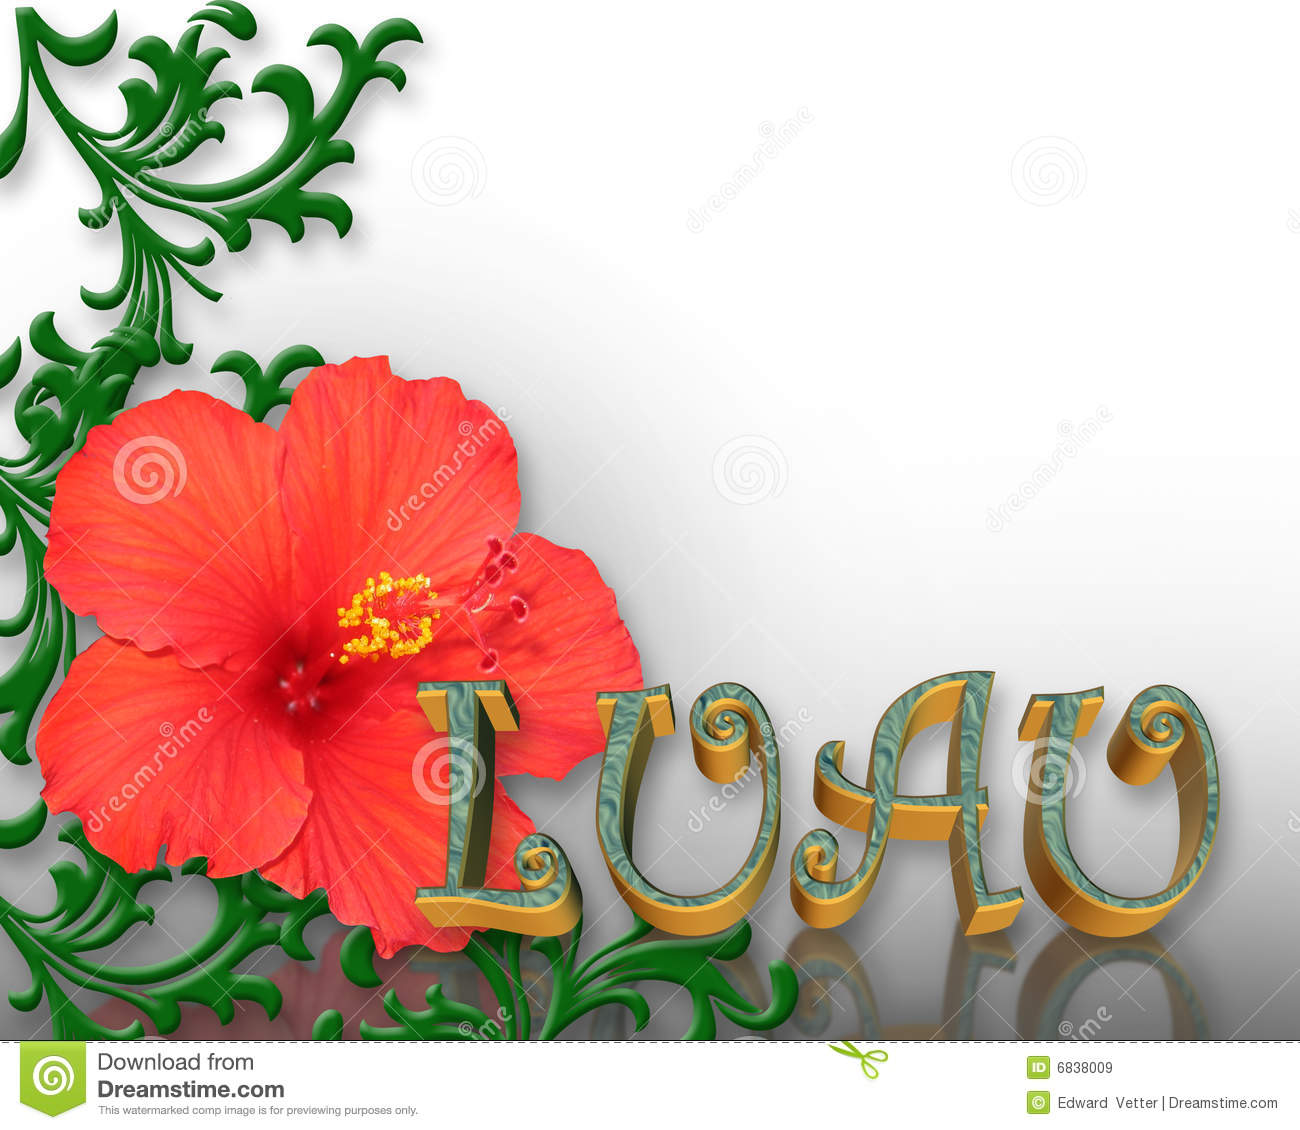 Luau Invitation Hibiscus Background Royalty Free Stock Images   Image    